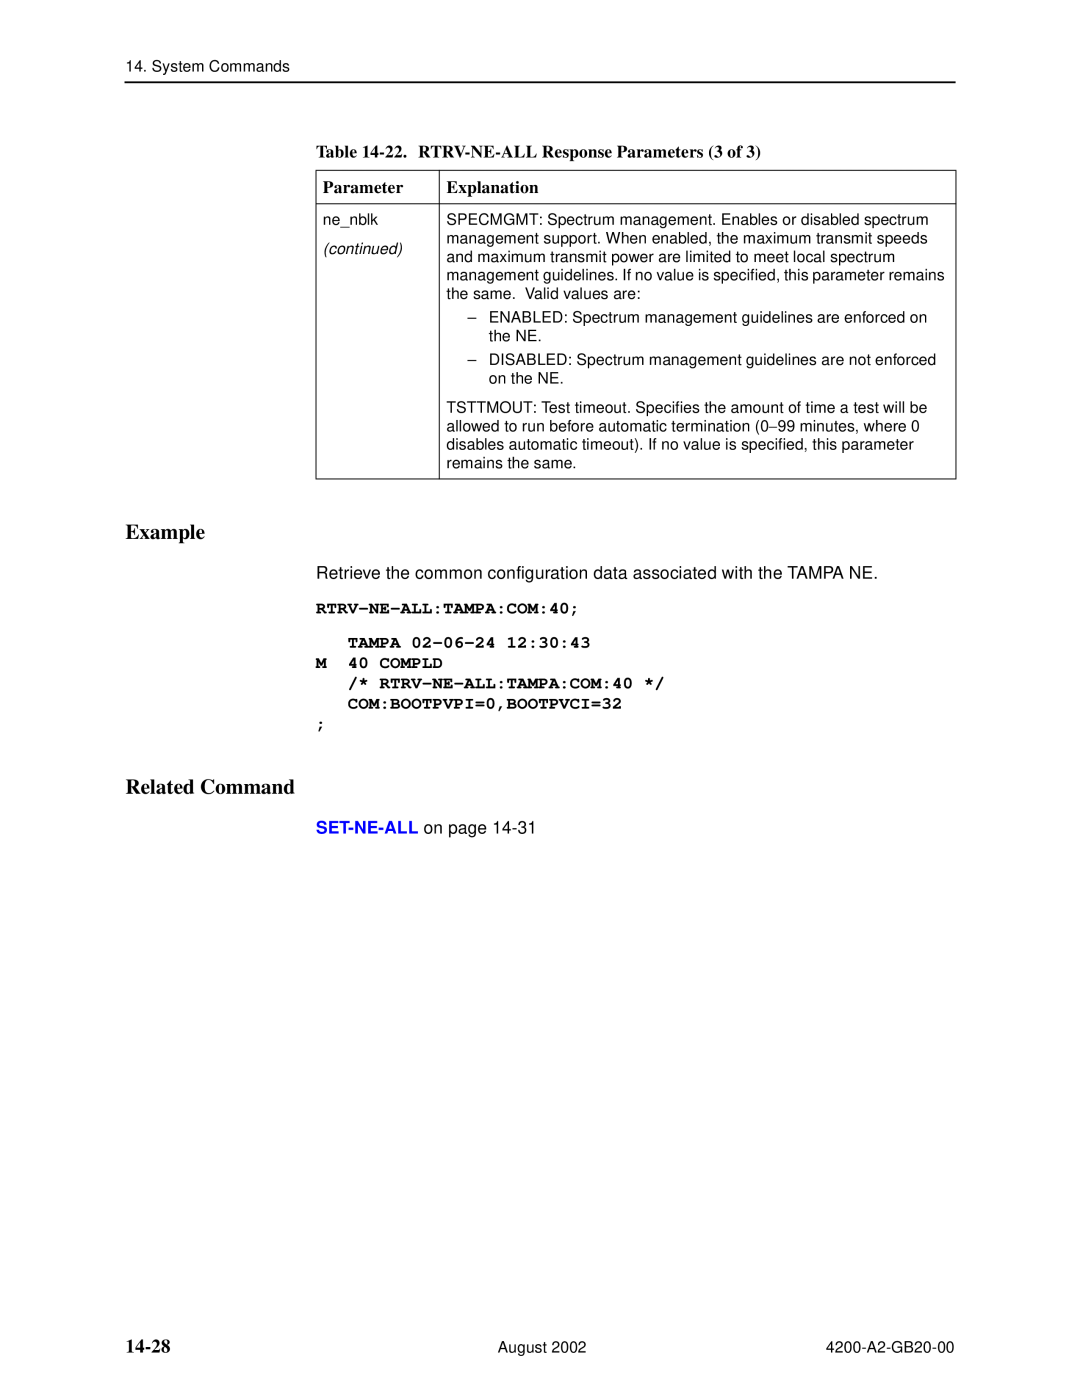 Paradyne 4200 14-28, 22. RTRV-NE-ALL Response Parameters 3 of, RTRV-NE-ALLTAMPACOM40 TAMPA 02-06-24 M 40 COMPLD, Example 